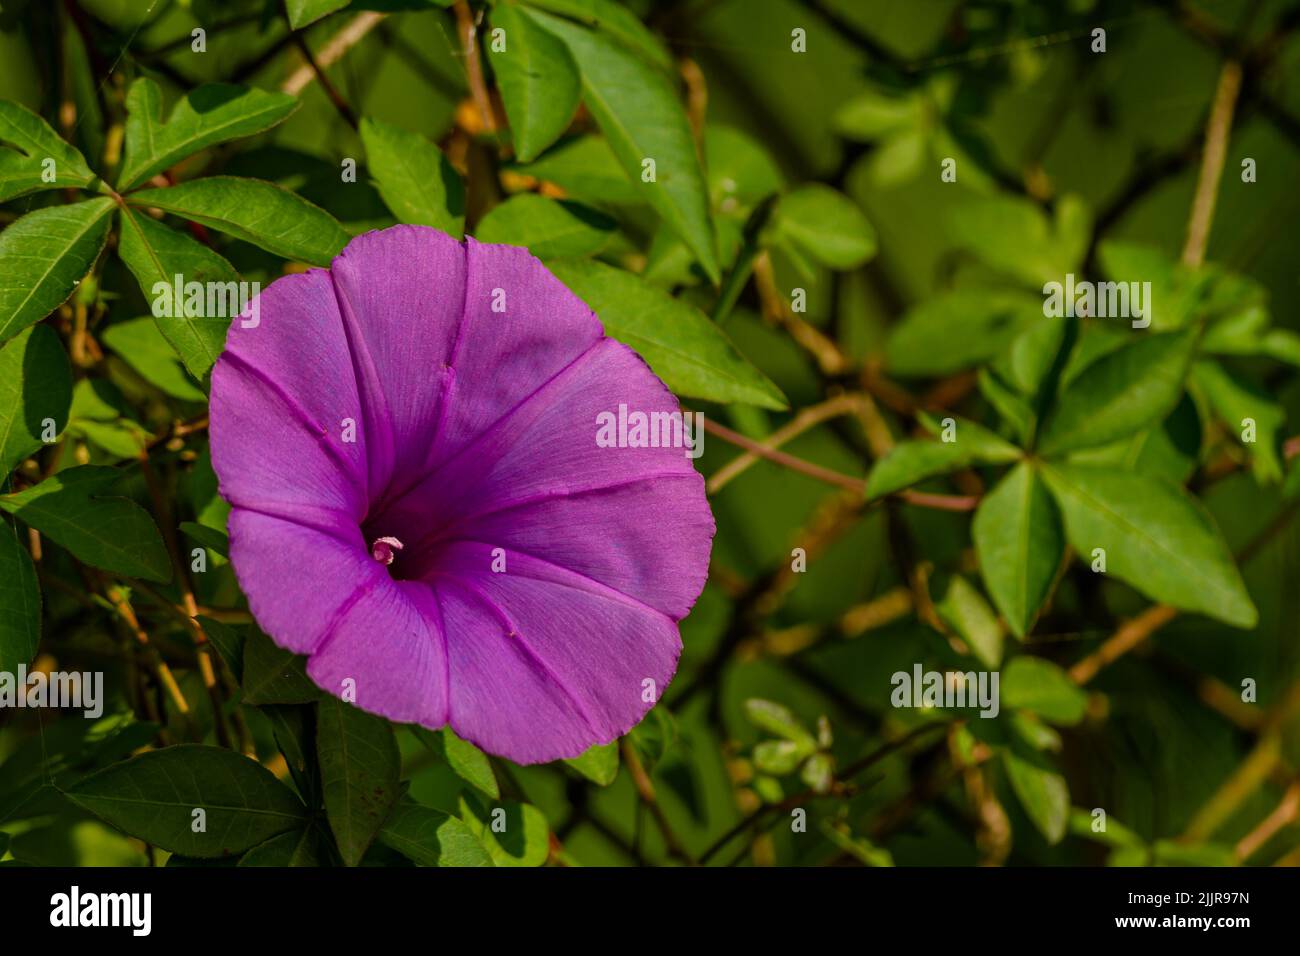 Ipomoea setifera Poir flower that is in bloom is shaped like a purple trumpet, blurred green foliage background Stock Photo